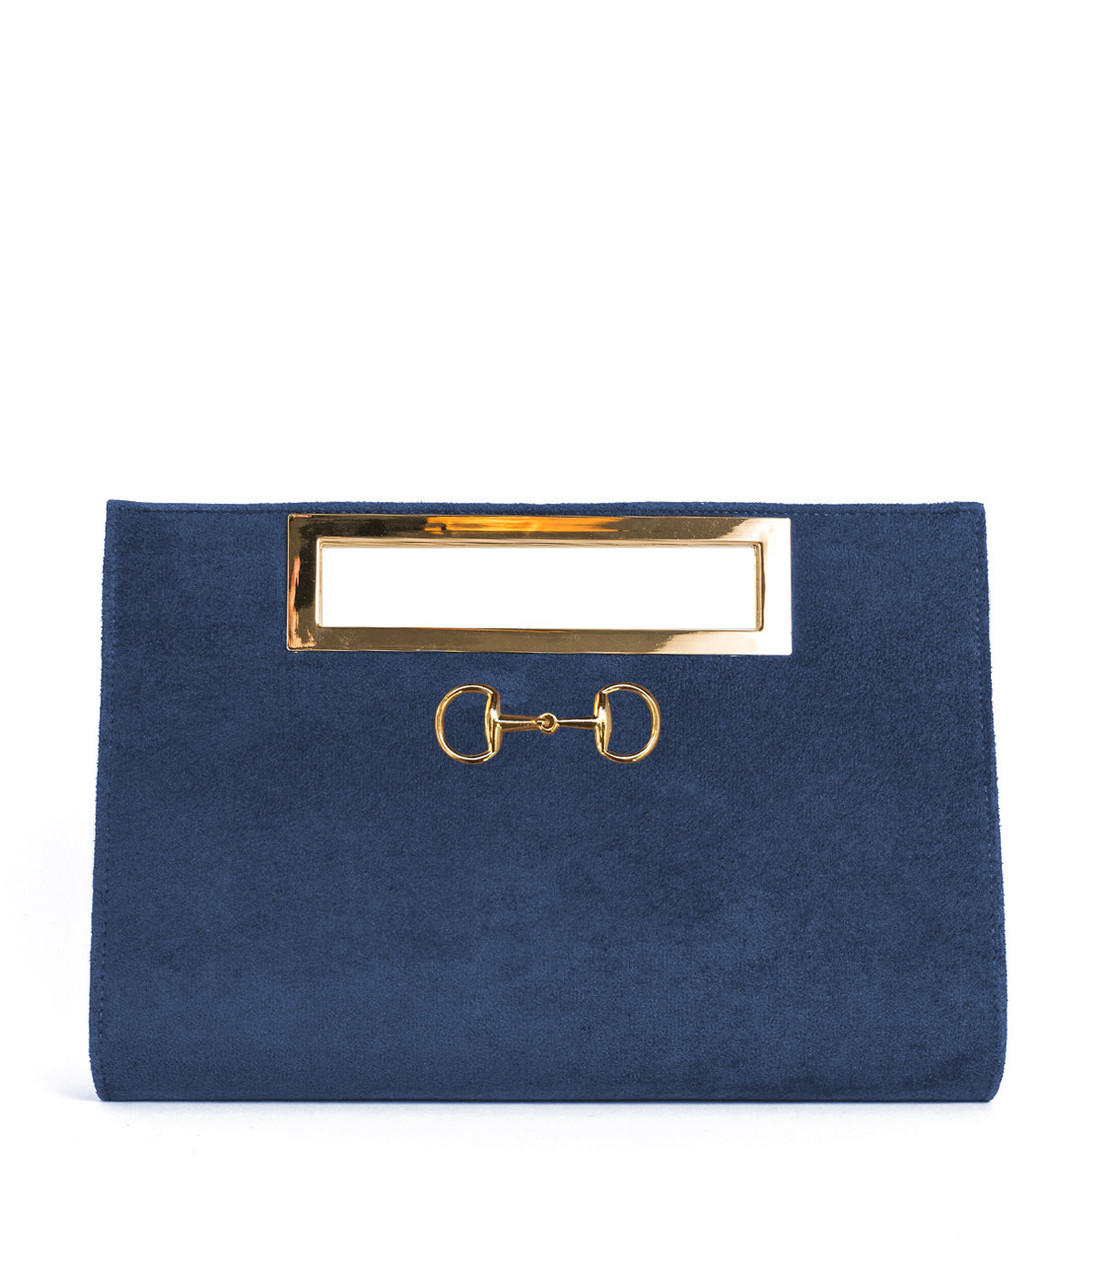 Blue Suede Handbag, Long Handle, Strap, Crossbody, Shoulder Bag, Vintage  British Made by Feltham, Mid Century Purse, Fashion Accessory - Etsy